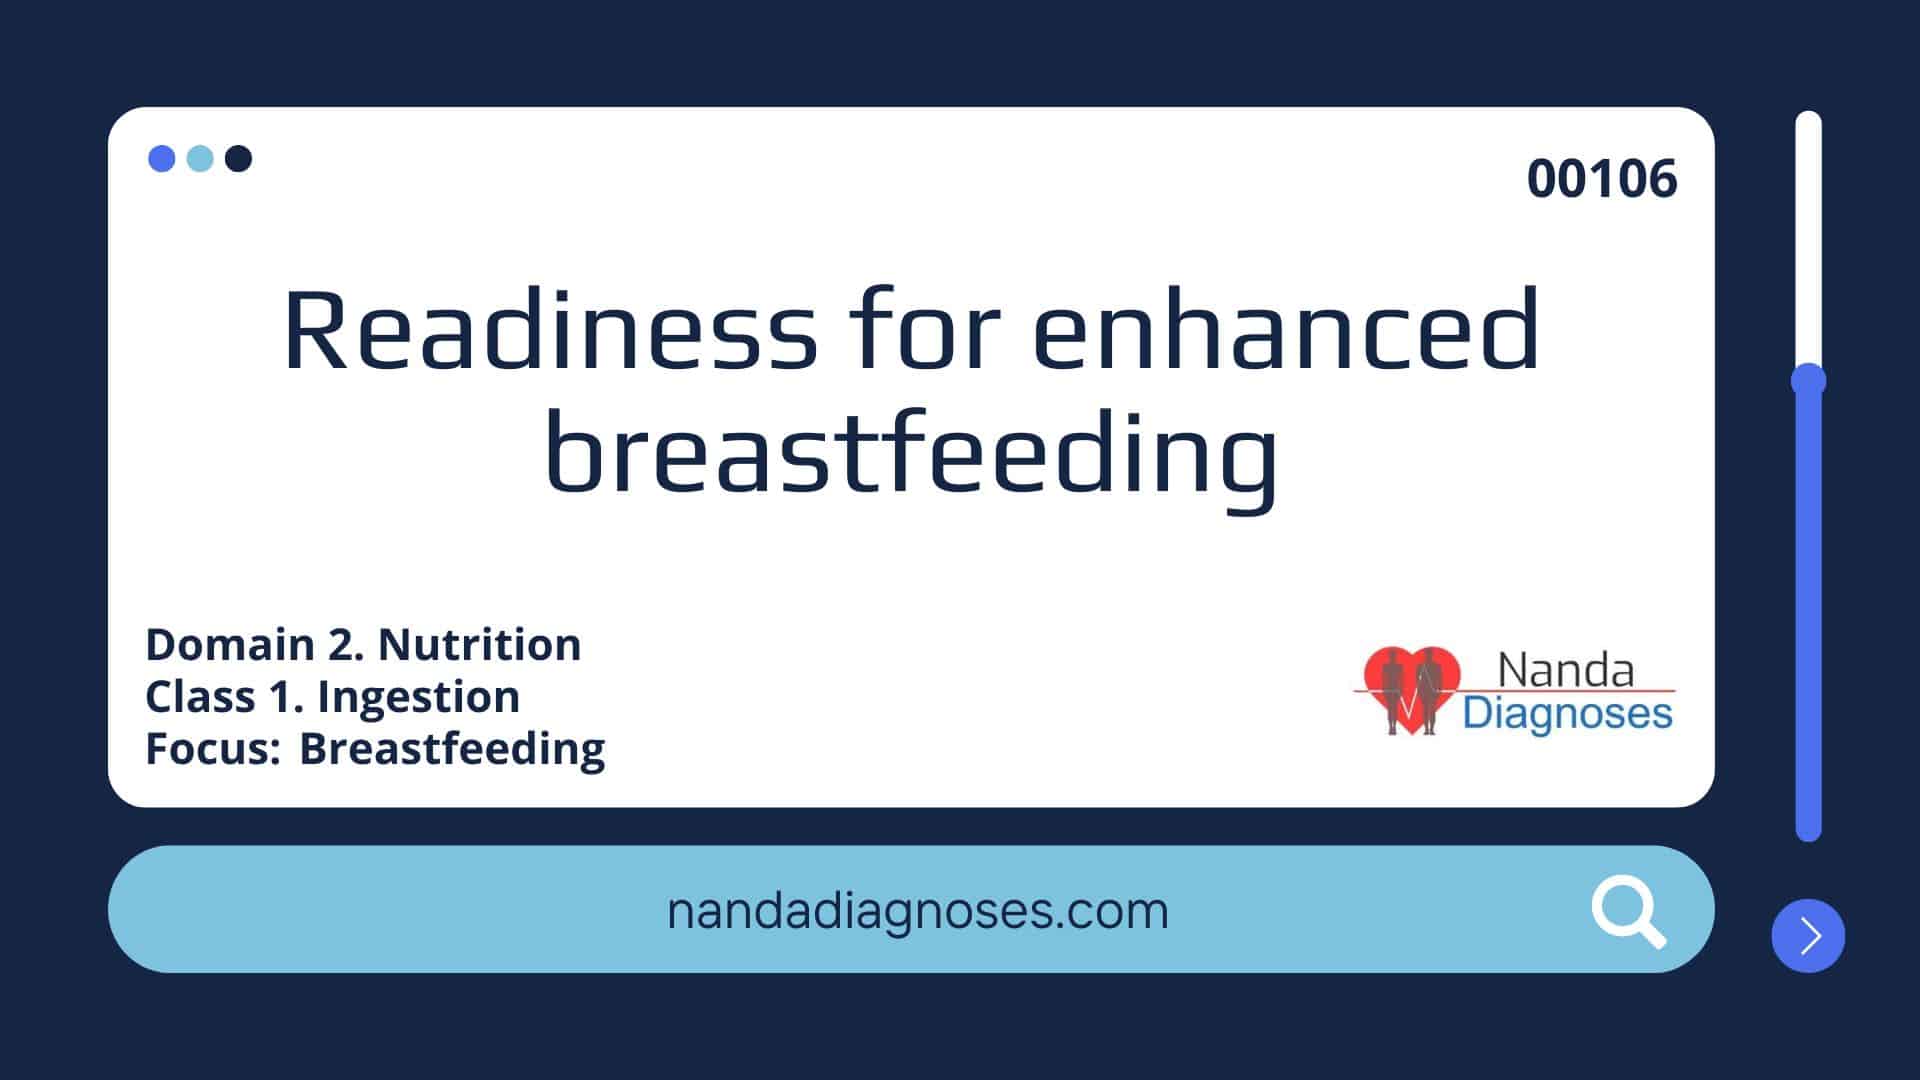 Nursing diagnosis Readiness for enhanced breastfeeding